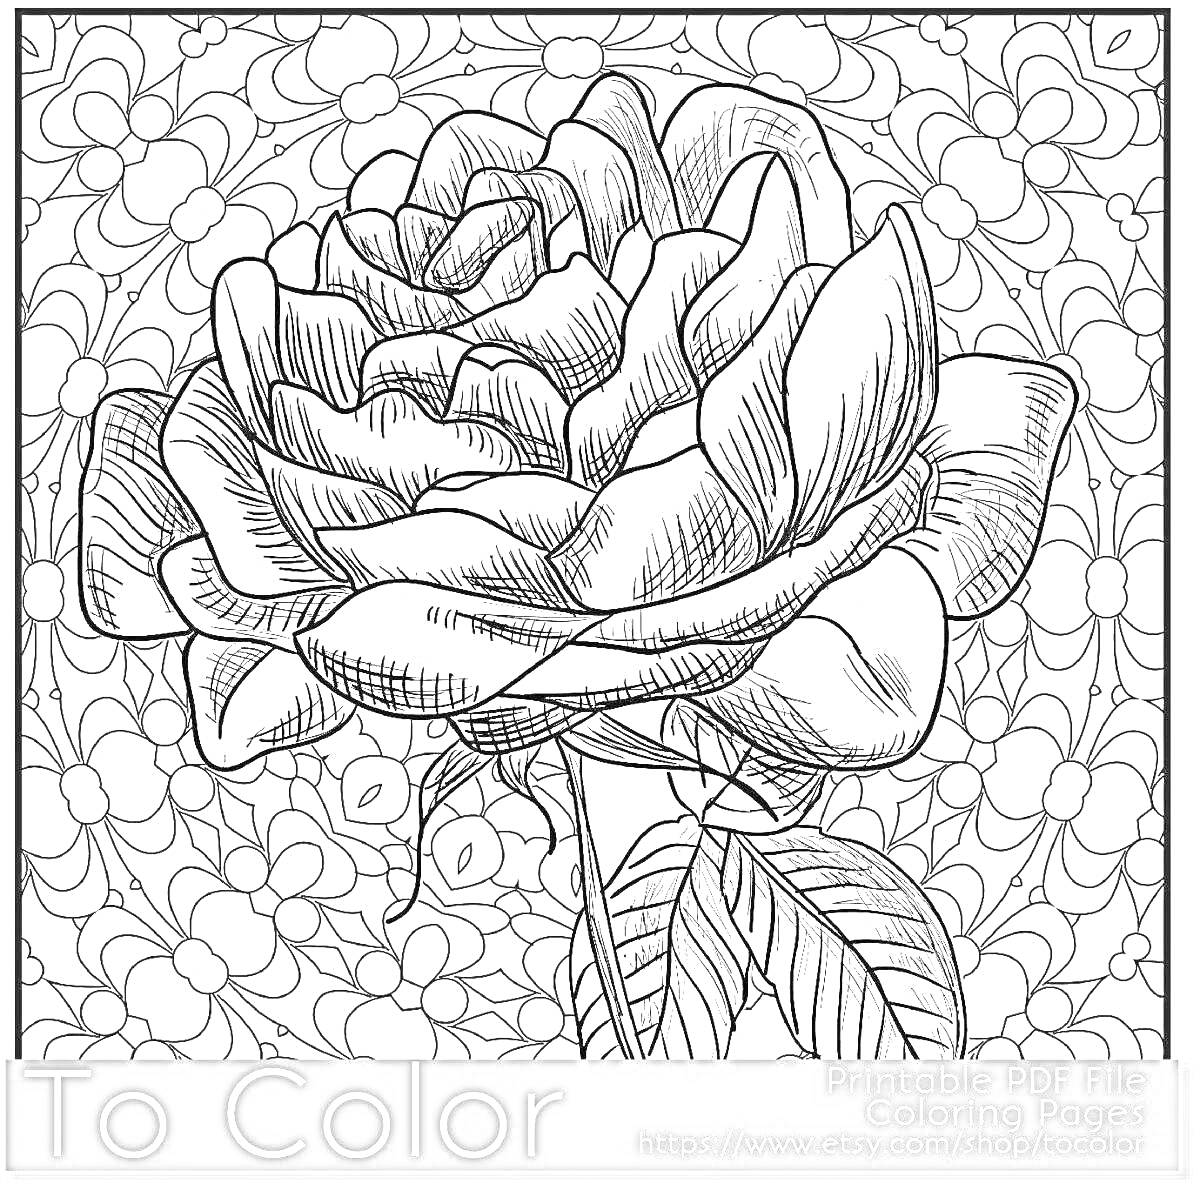 Раскраска Роза с листьями на фоне множества мелких цветов